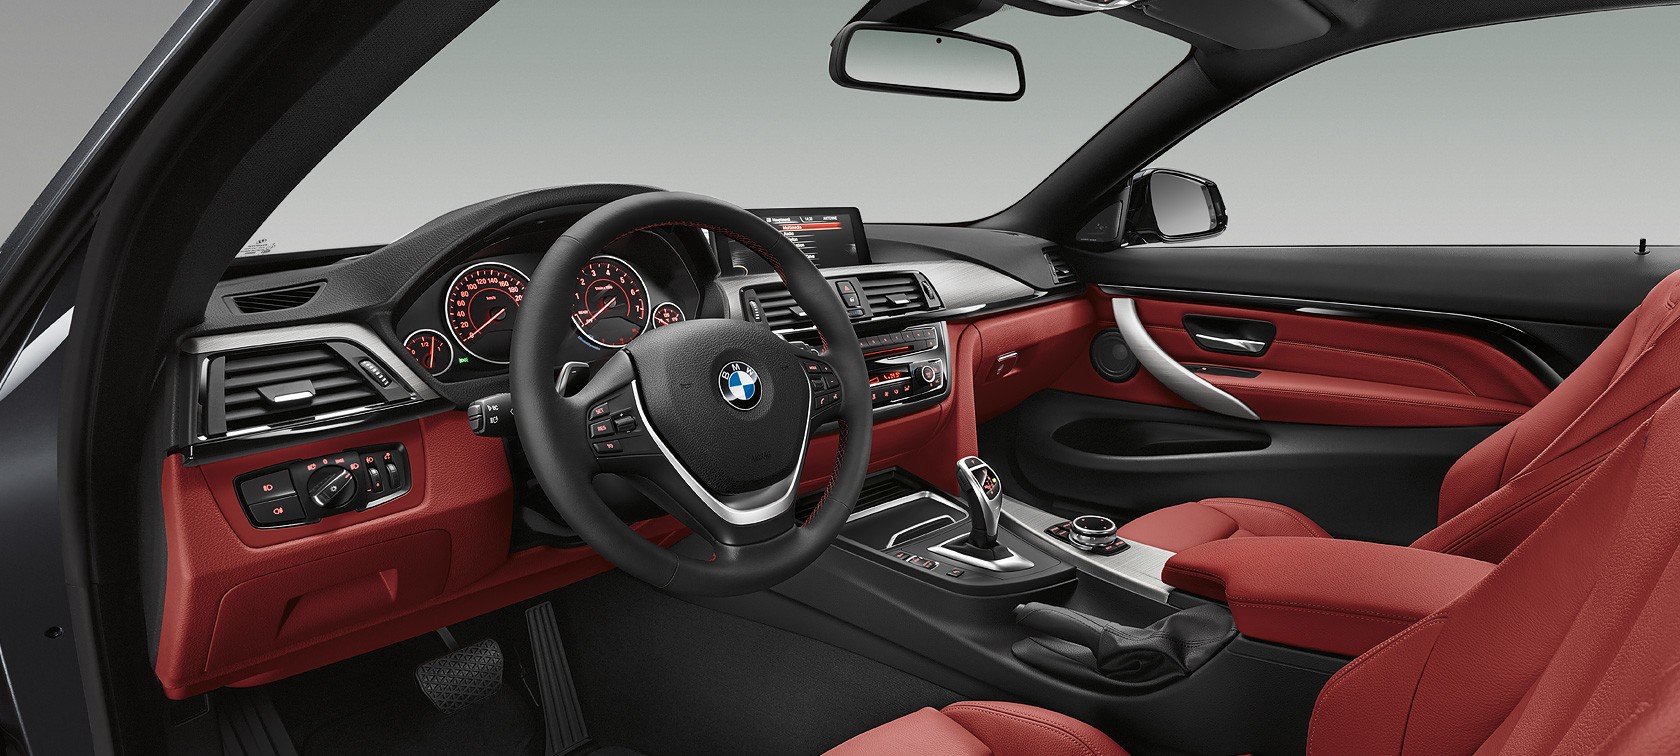 BMW 4 Serisi Coupe Ic Tasarim